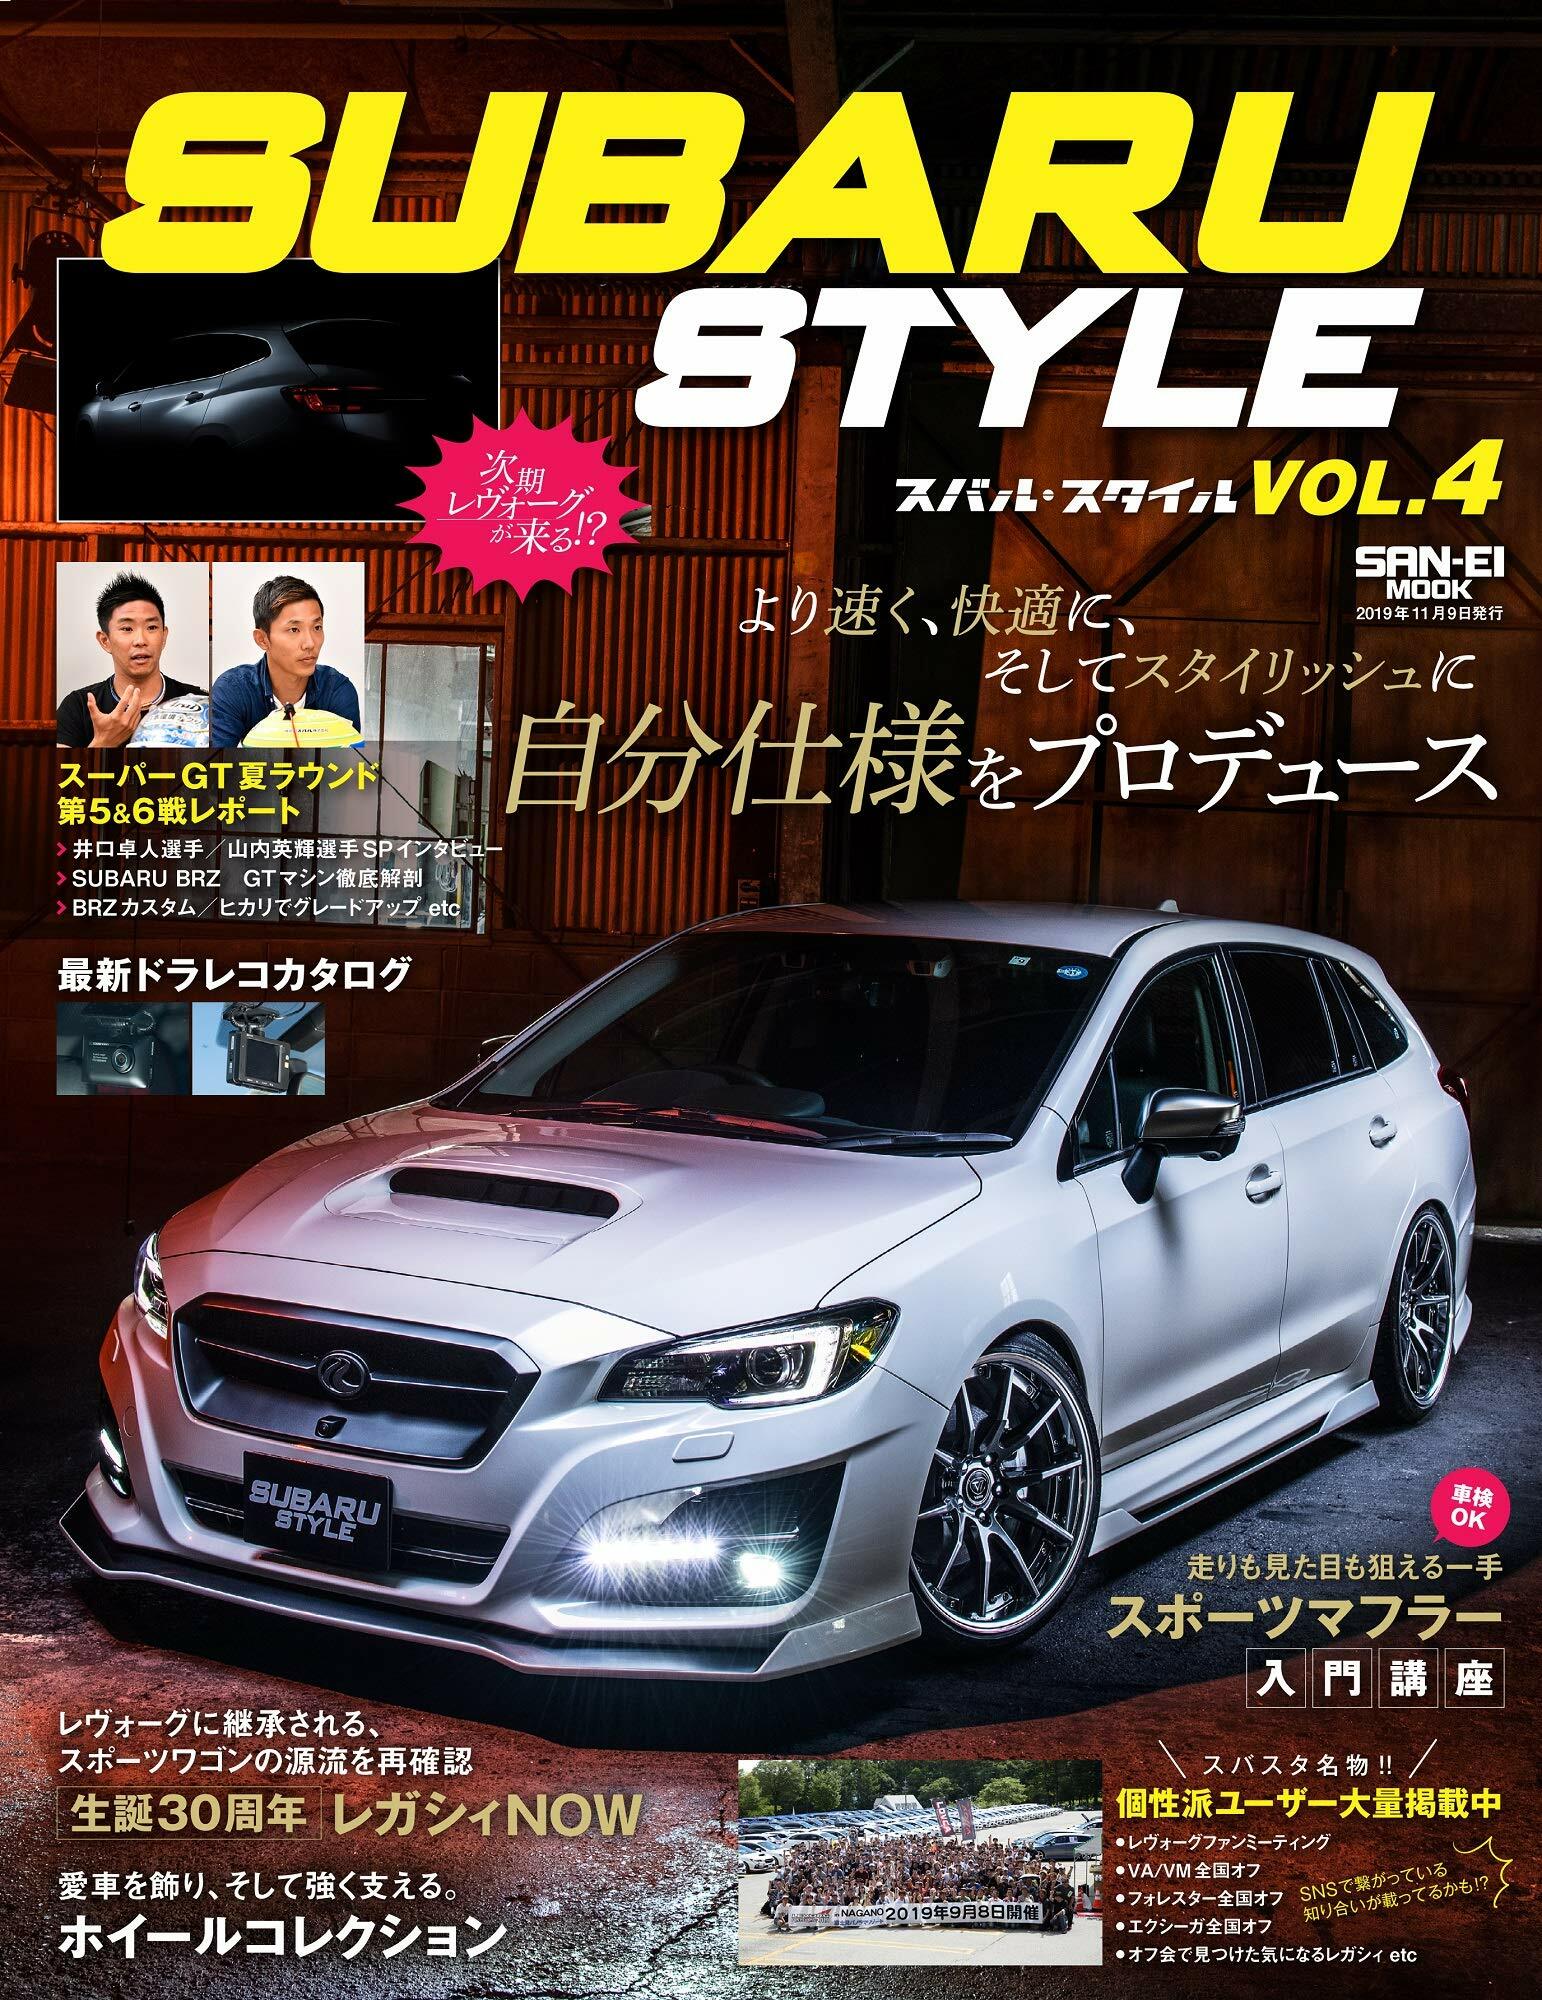 SUBARU STYLE Vol.4 (サンエイムック)